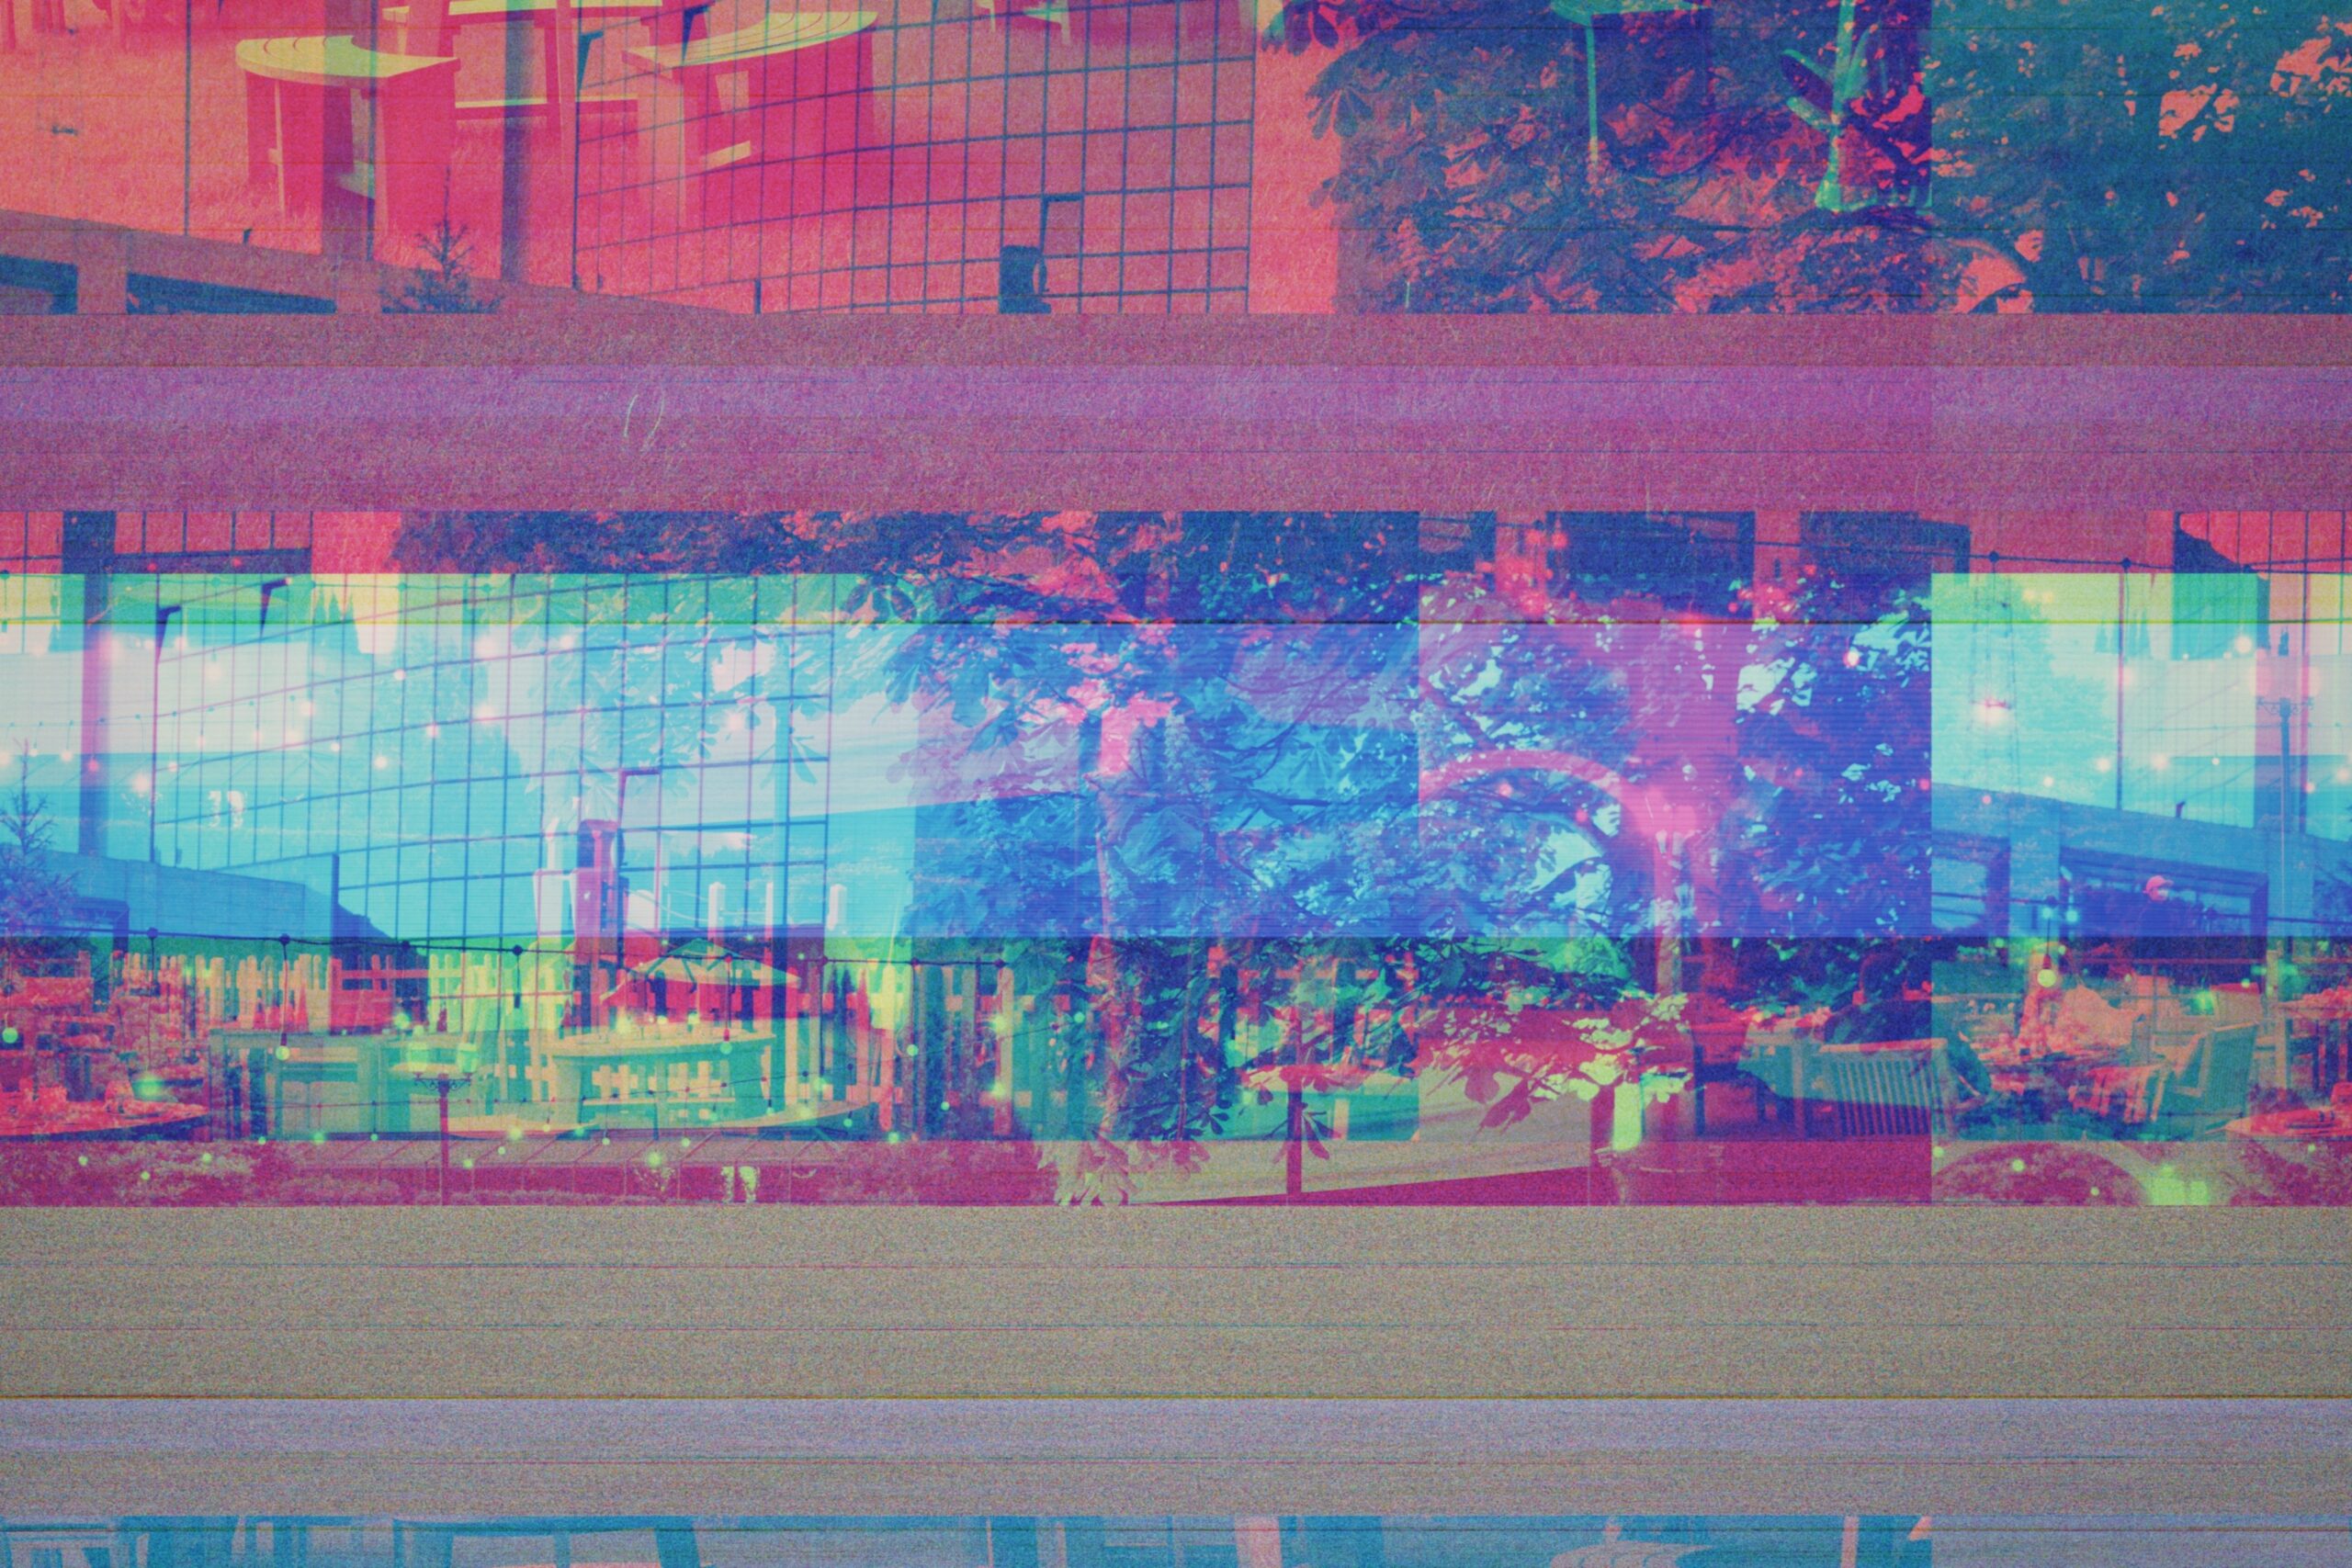 A glitch style image of a cityscape